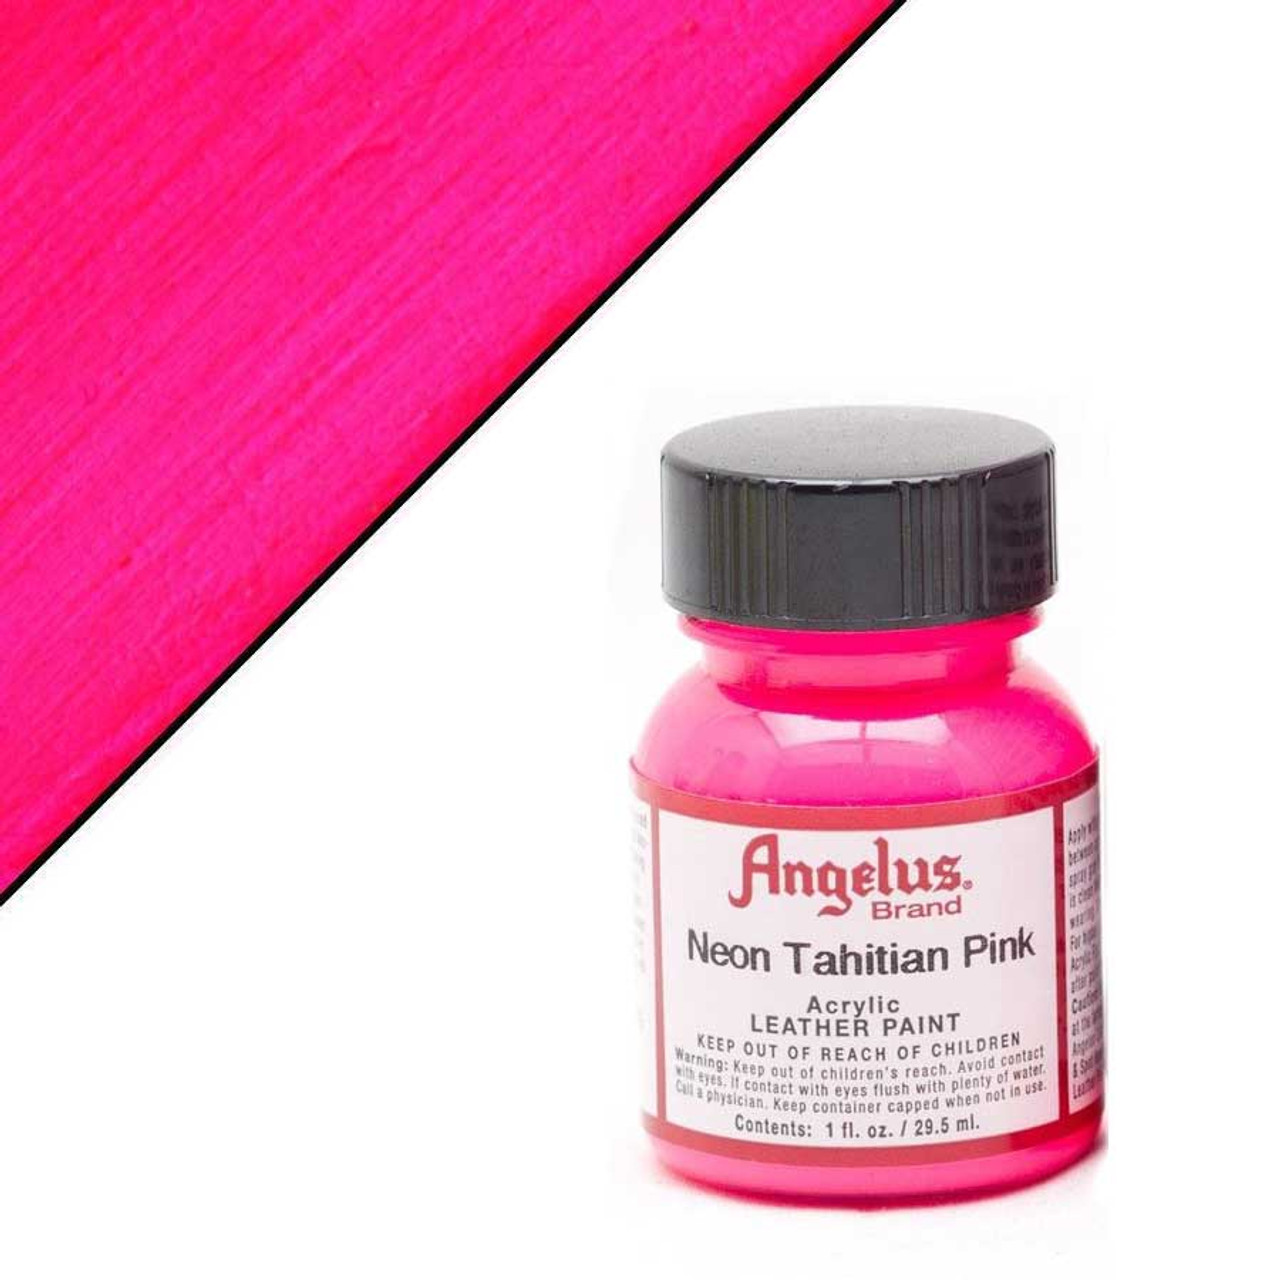 Angelus Leather Paint - Neon Tahitian Pink, 4 oz